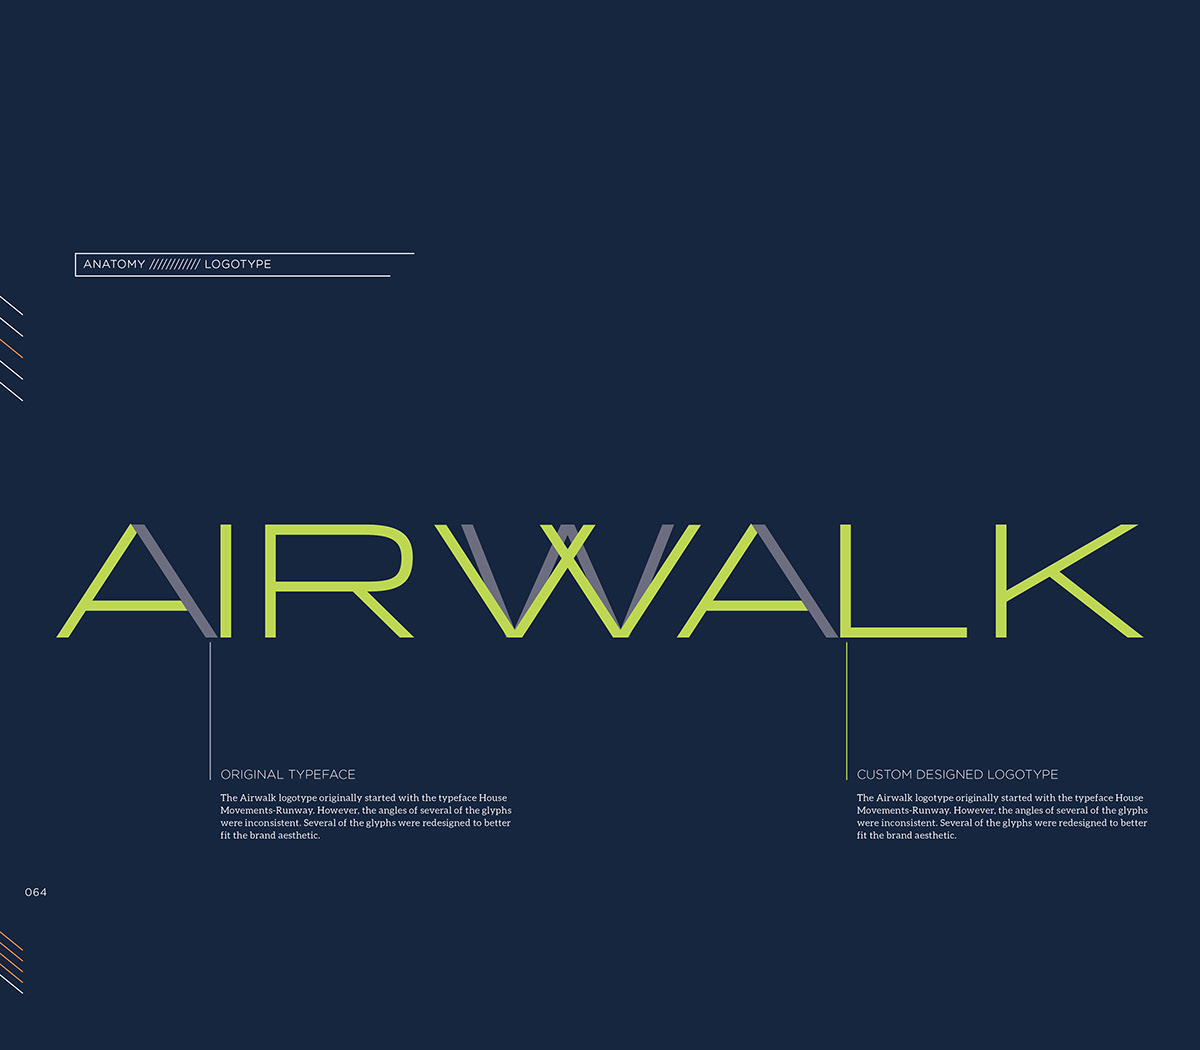 Rebrand GR 605 nature of identity airwalk